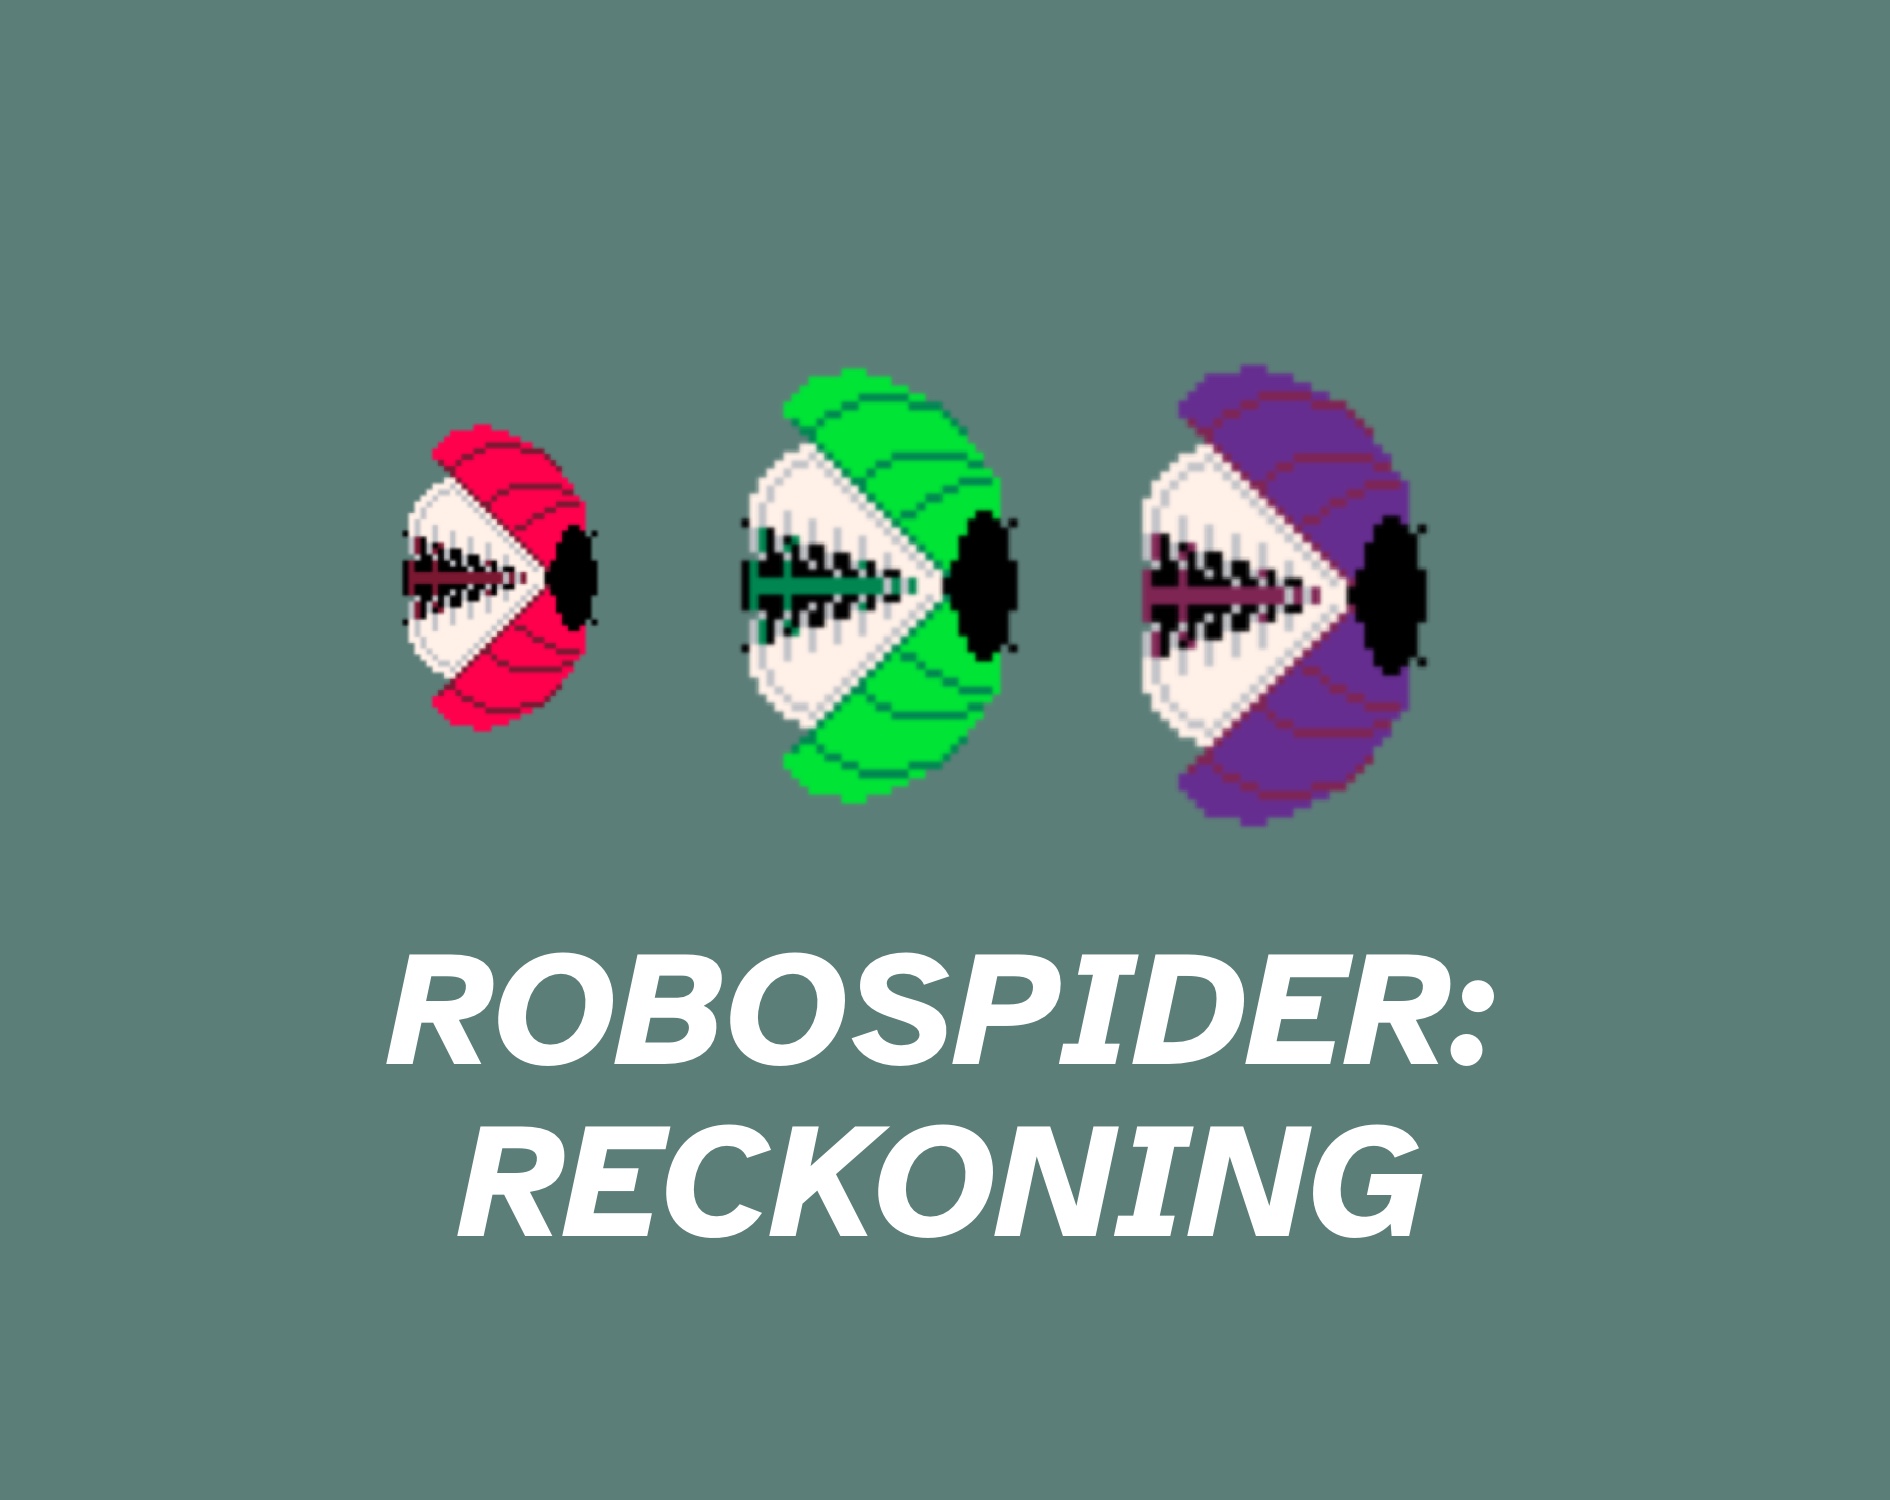 RoboSpider: Reckoning